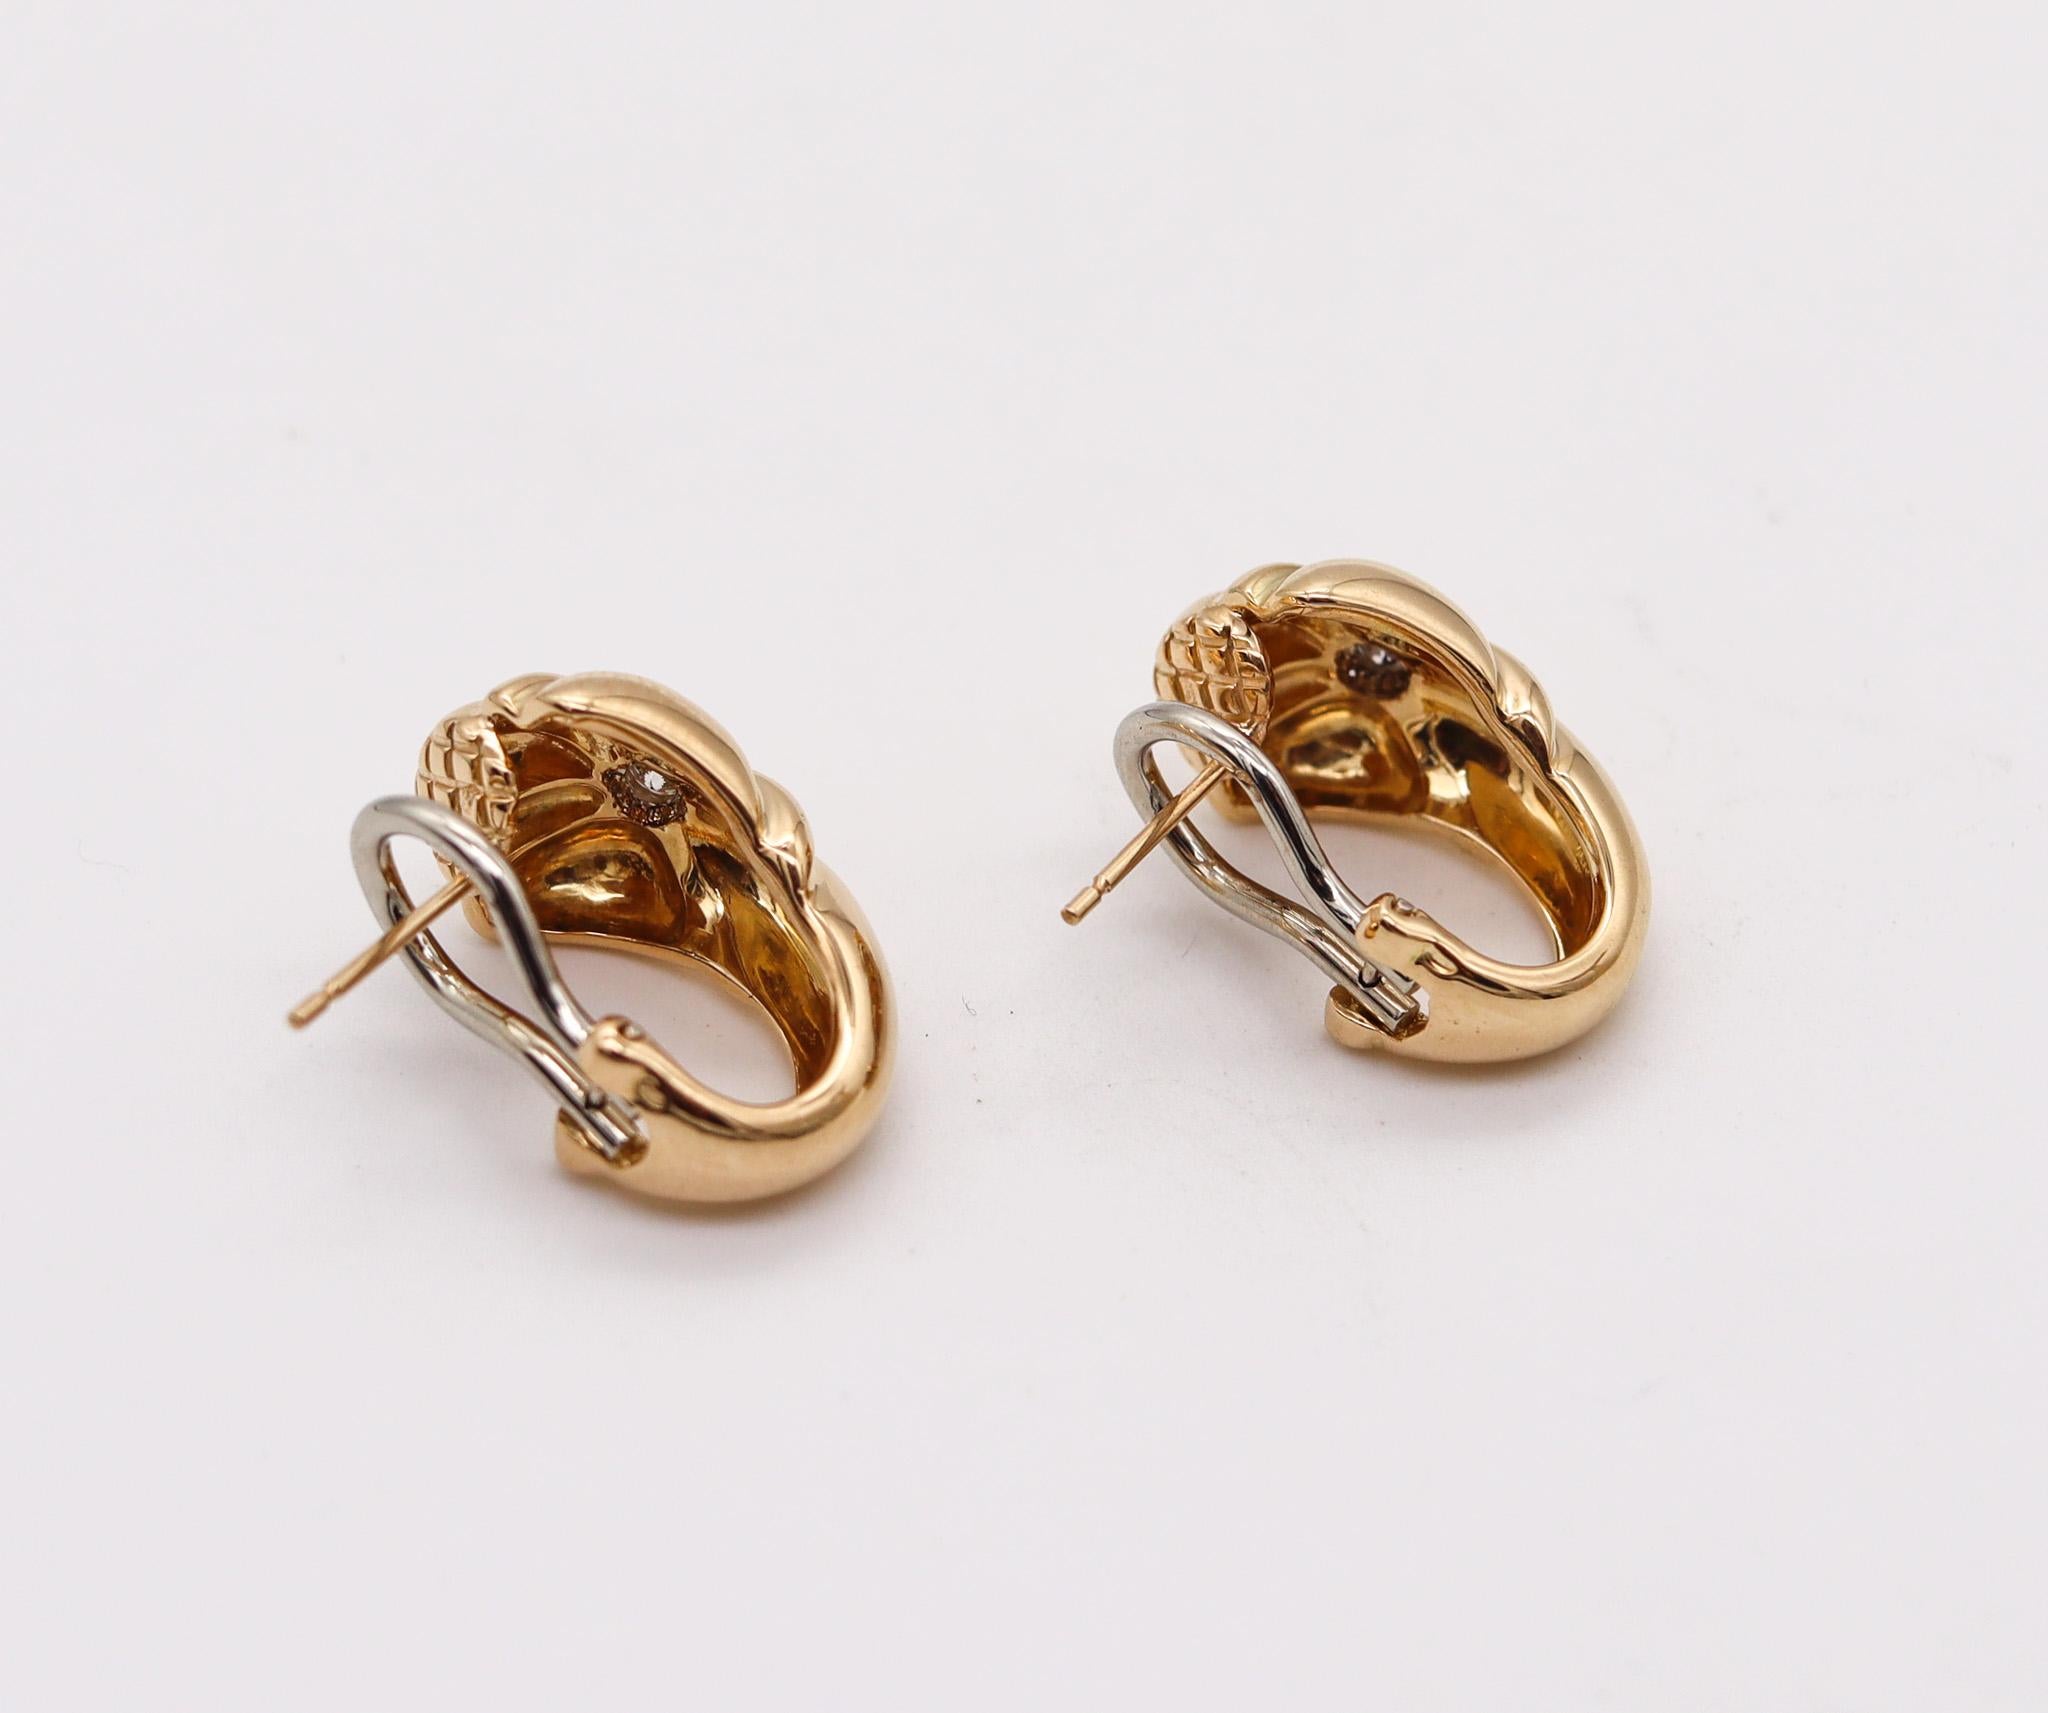 Brilliant Cut Chaumet Paris 1970 Diamonds Modernist Hoops Earrings in 18 Karat Yellow Gold